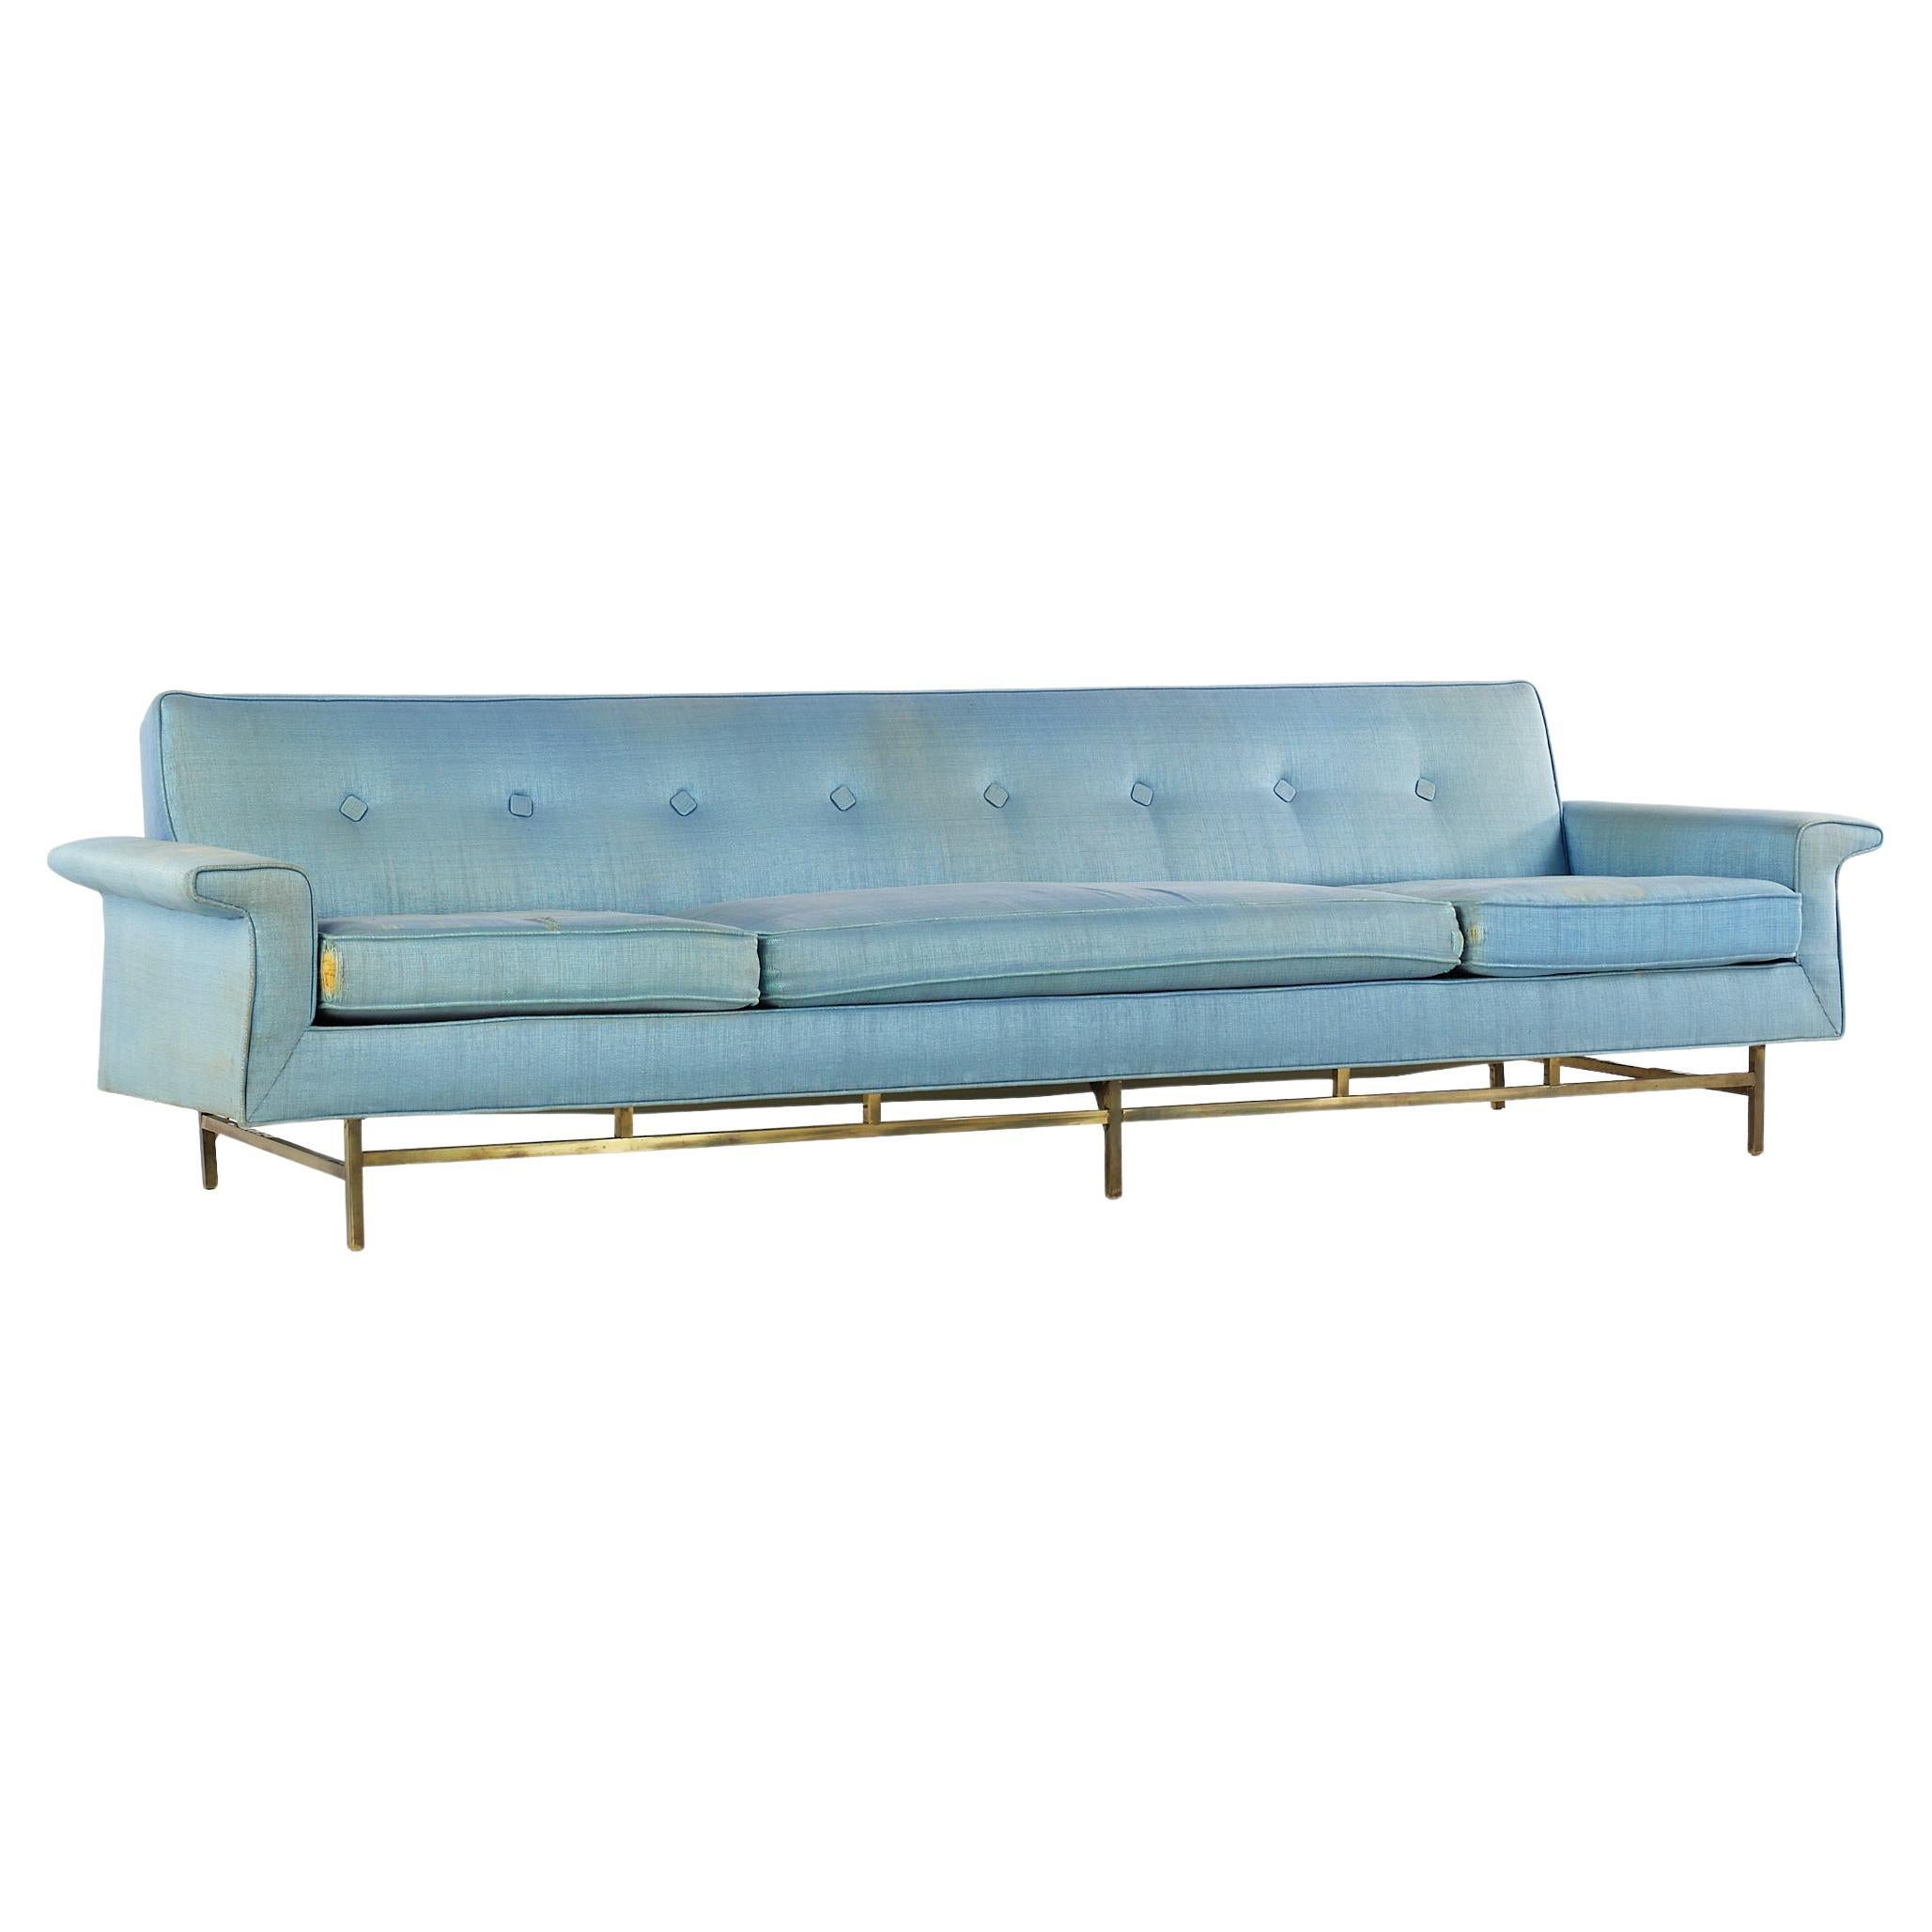 Ben Seibel for Stand Built Furniture Midcentury Brass Base Sofa For Sale